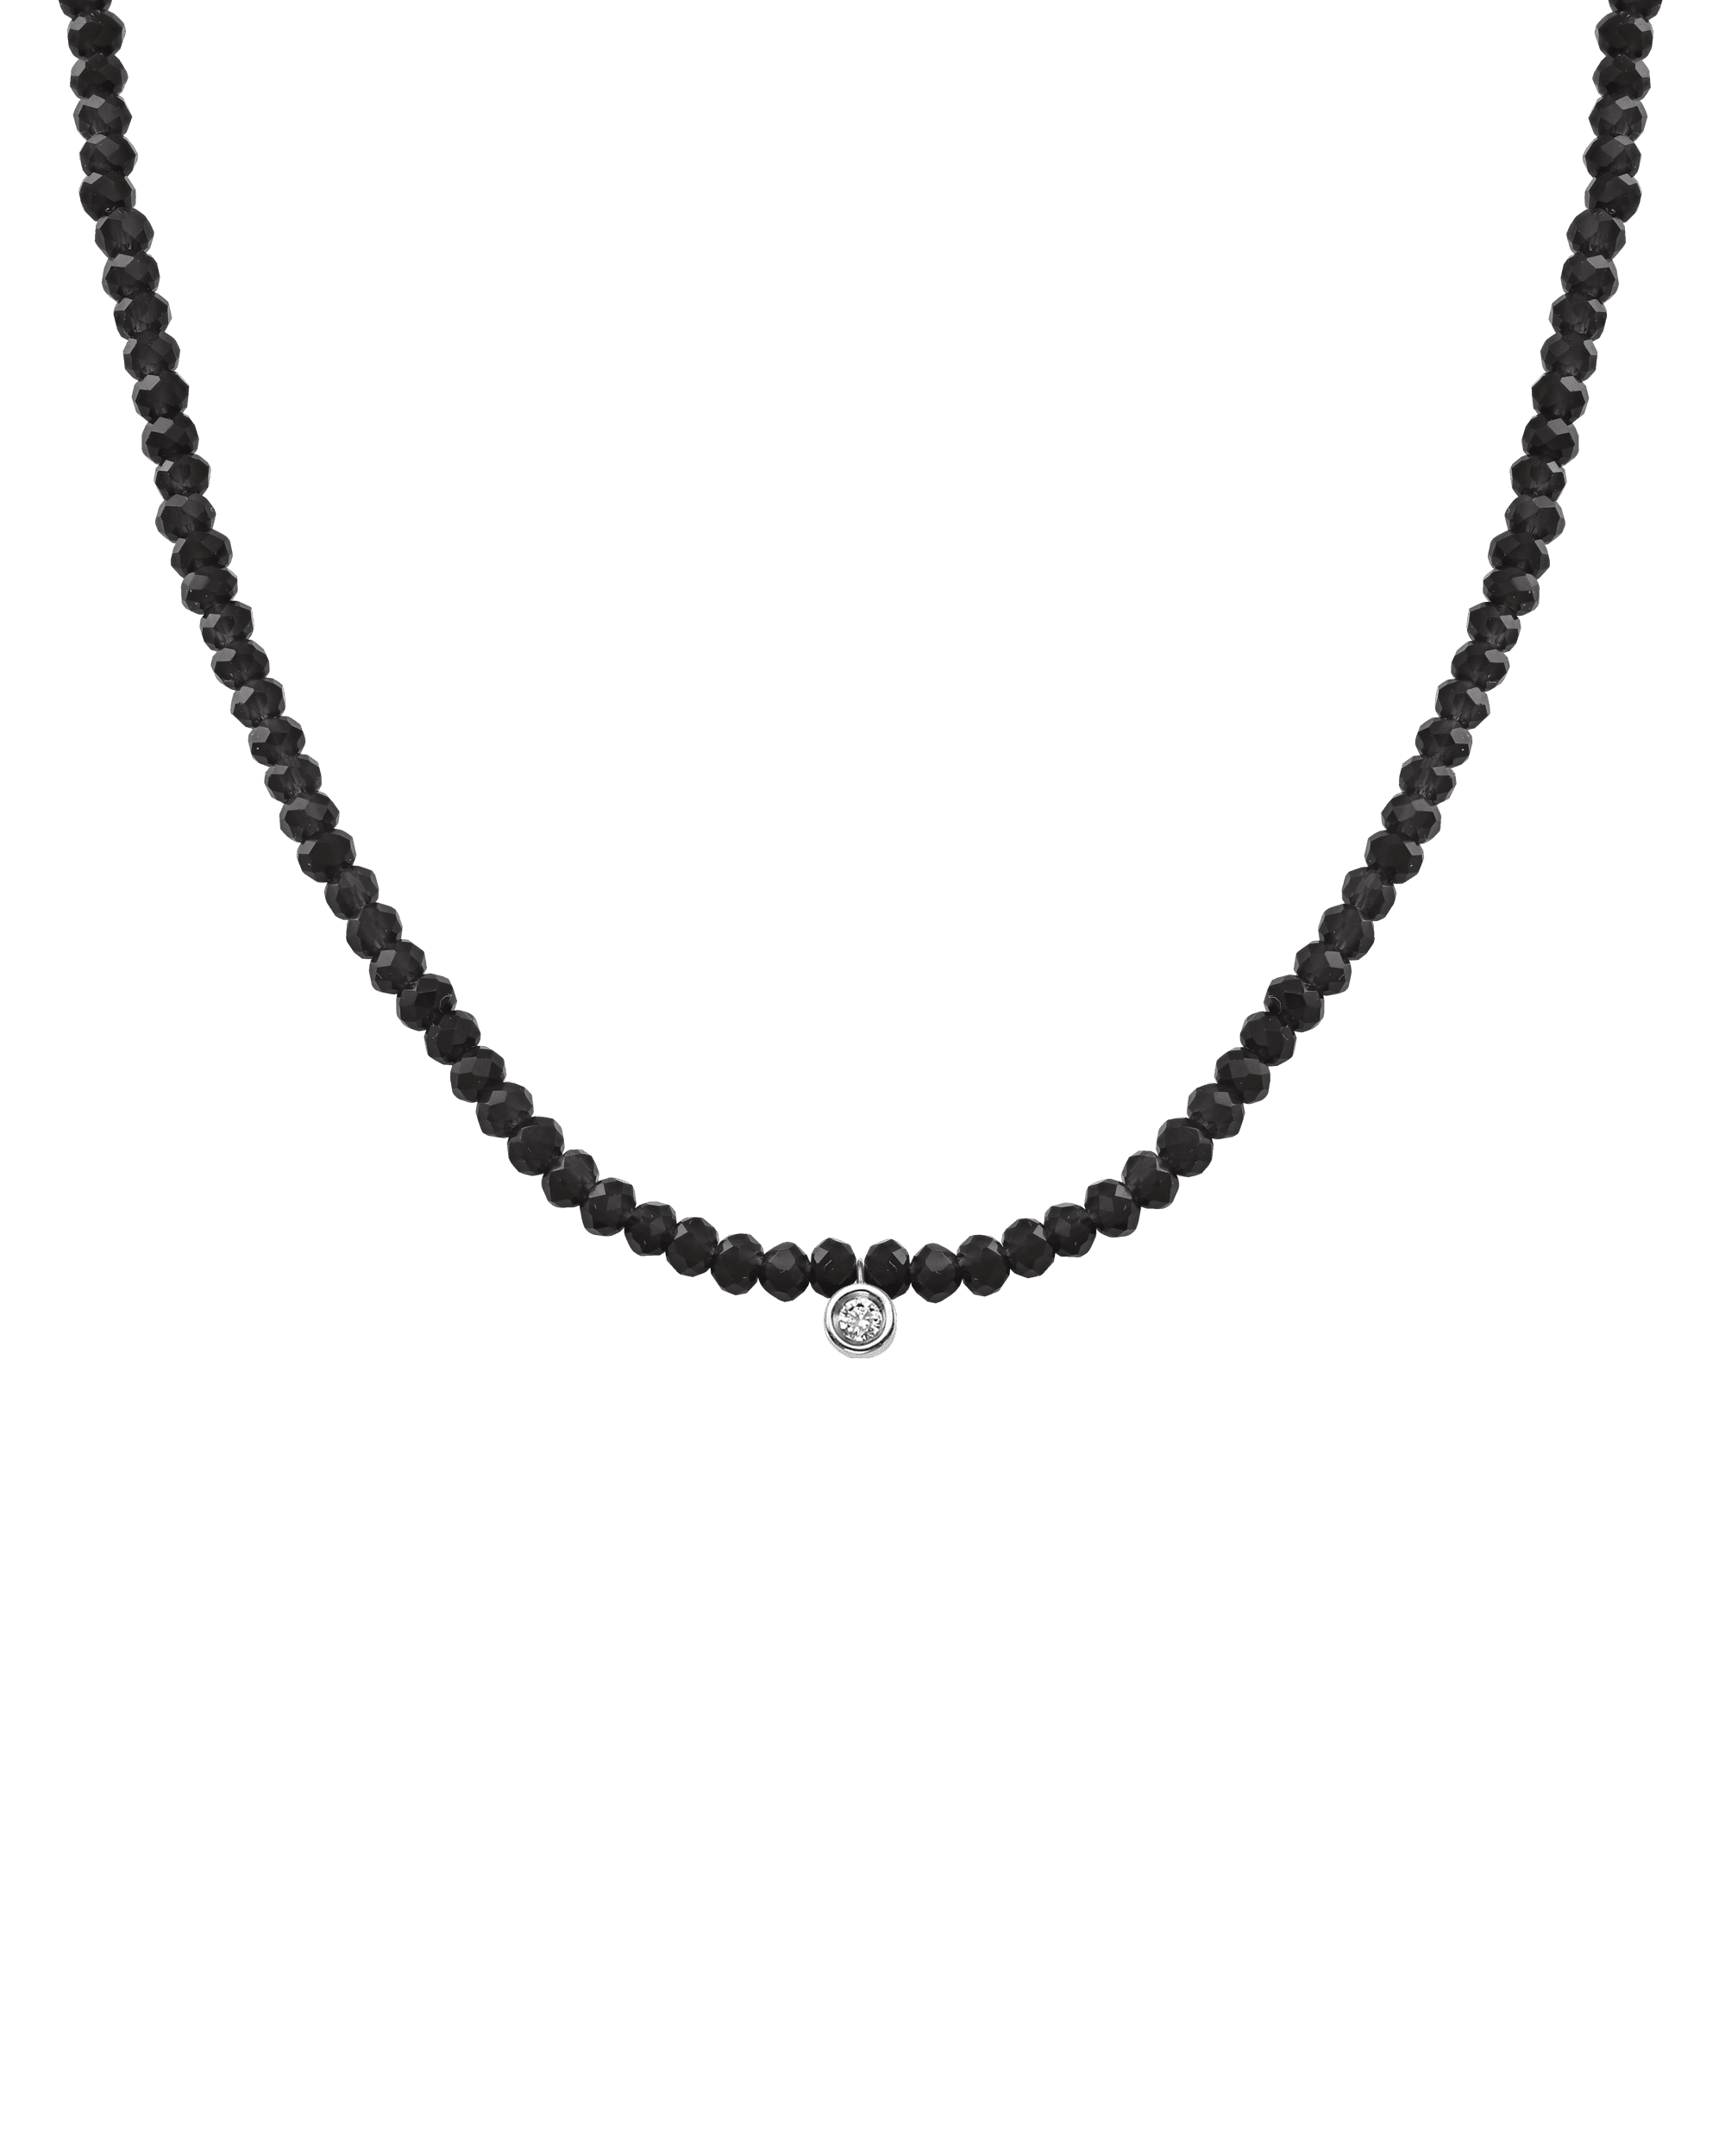 The Gemstone & Diamond Necklace - 14K White Gold